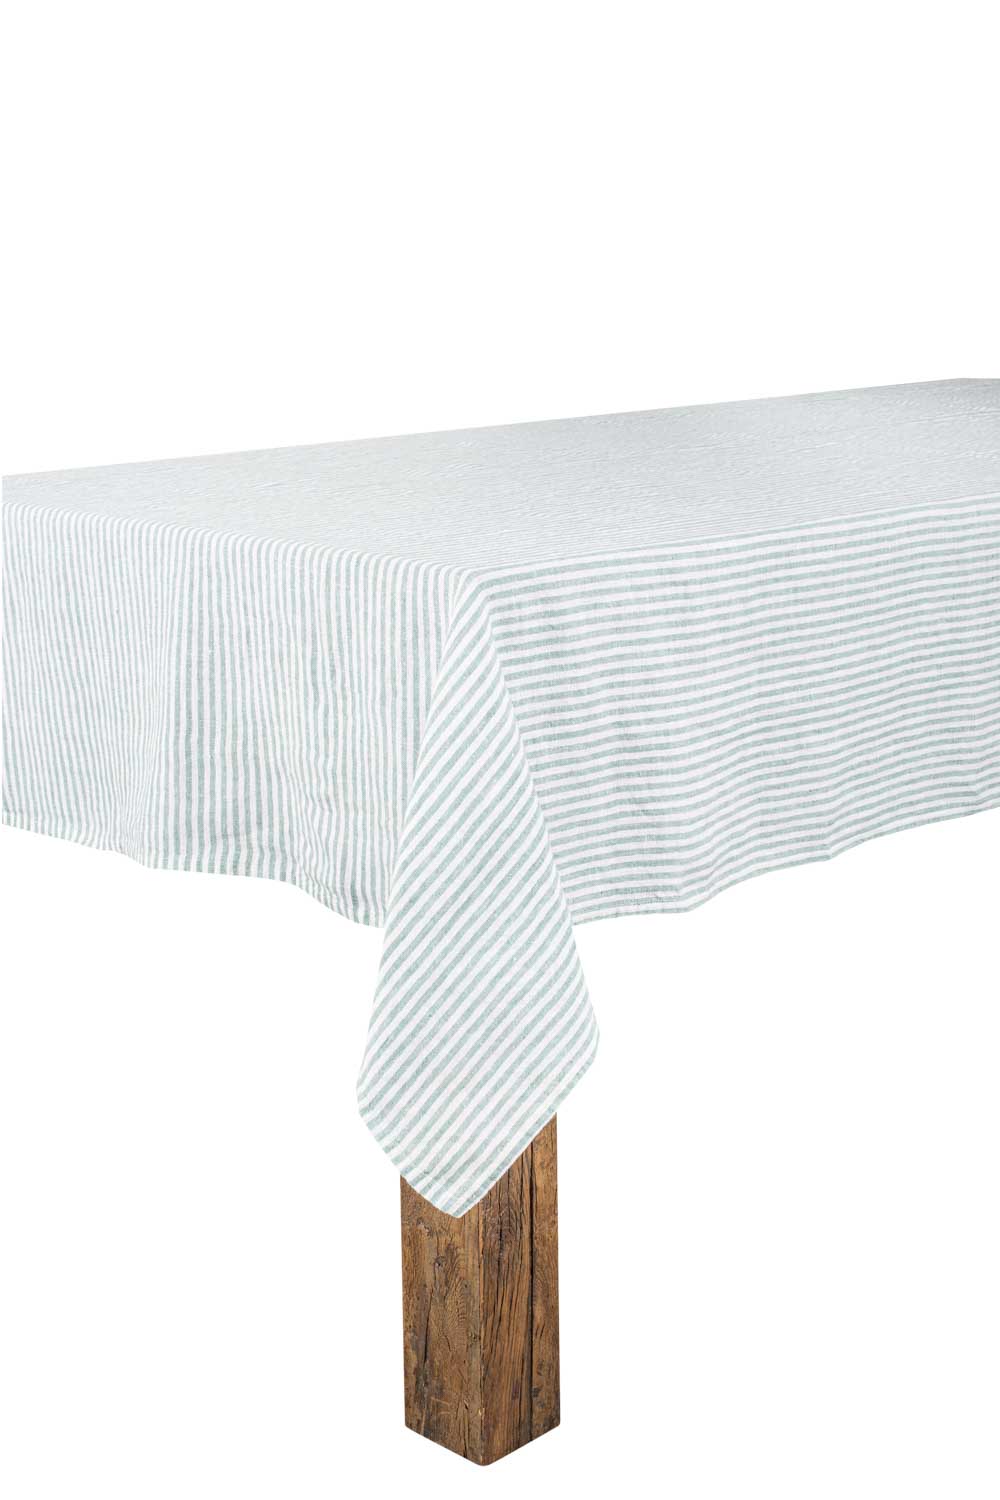 Vezzani square washed linen tablecloth 160x160 cm - Harmony Haomy